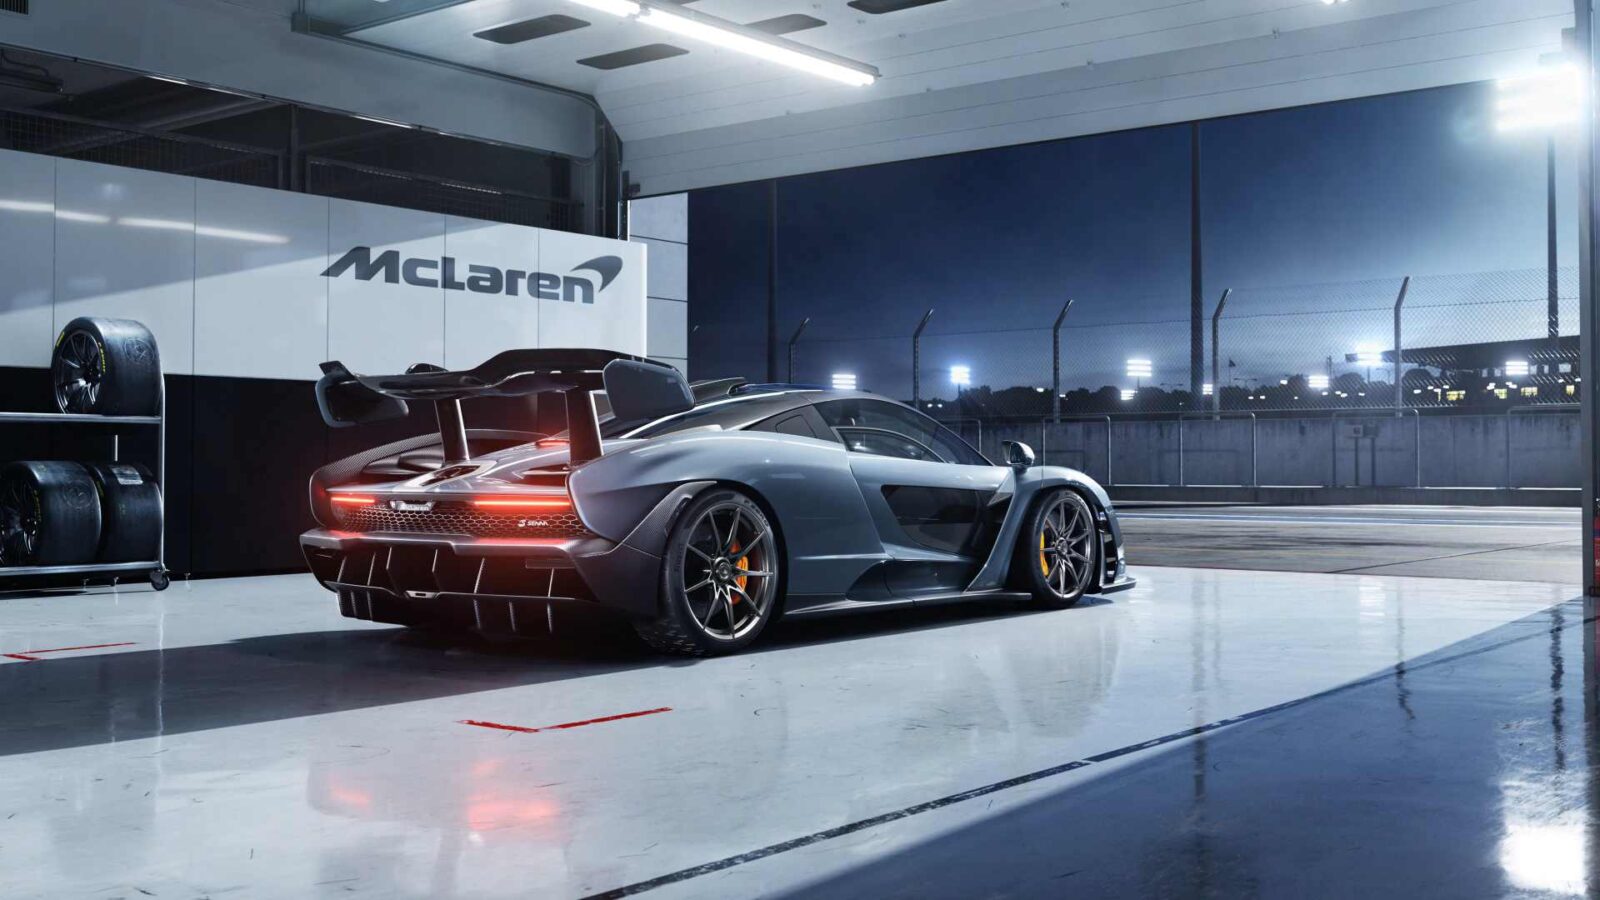 McLaren Car 4K - Free Live Wallpaper - Live Desktop Wallpapers